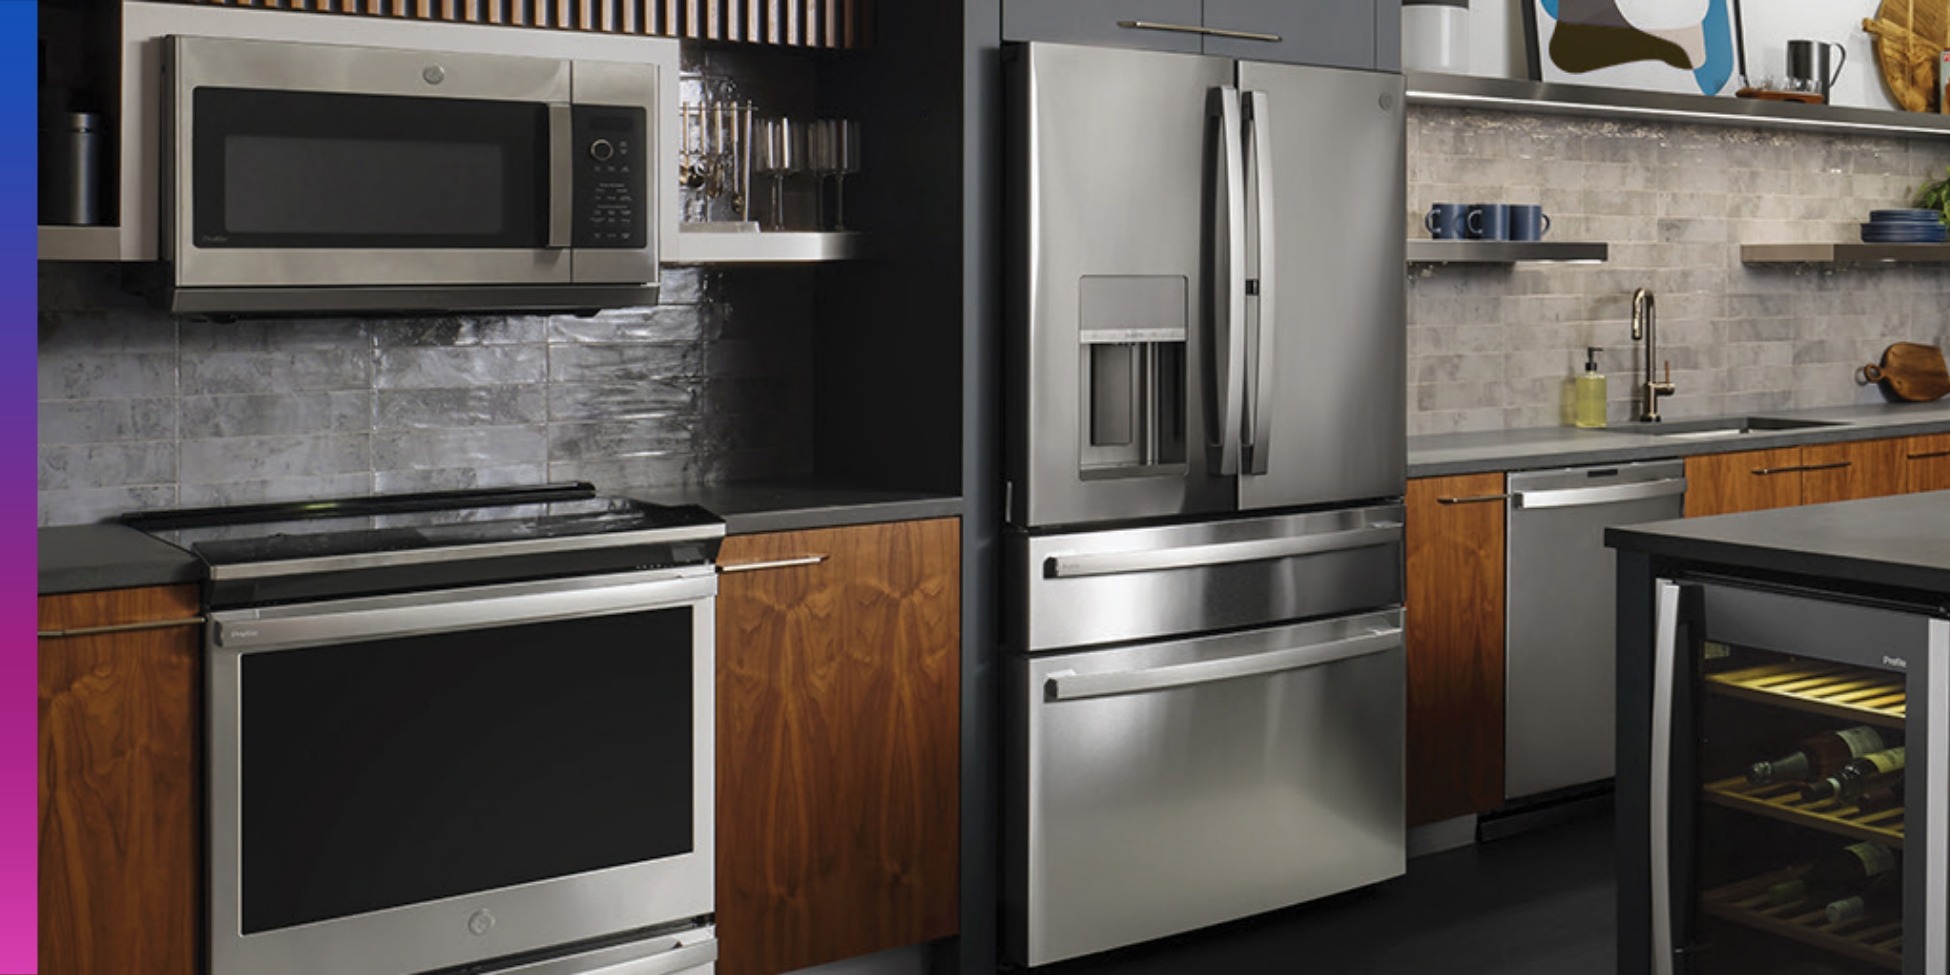 GE Profile Kitchen Appliances